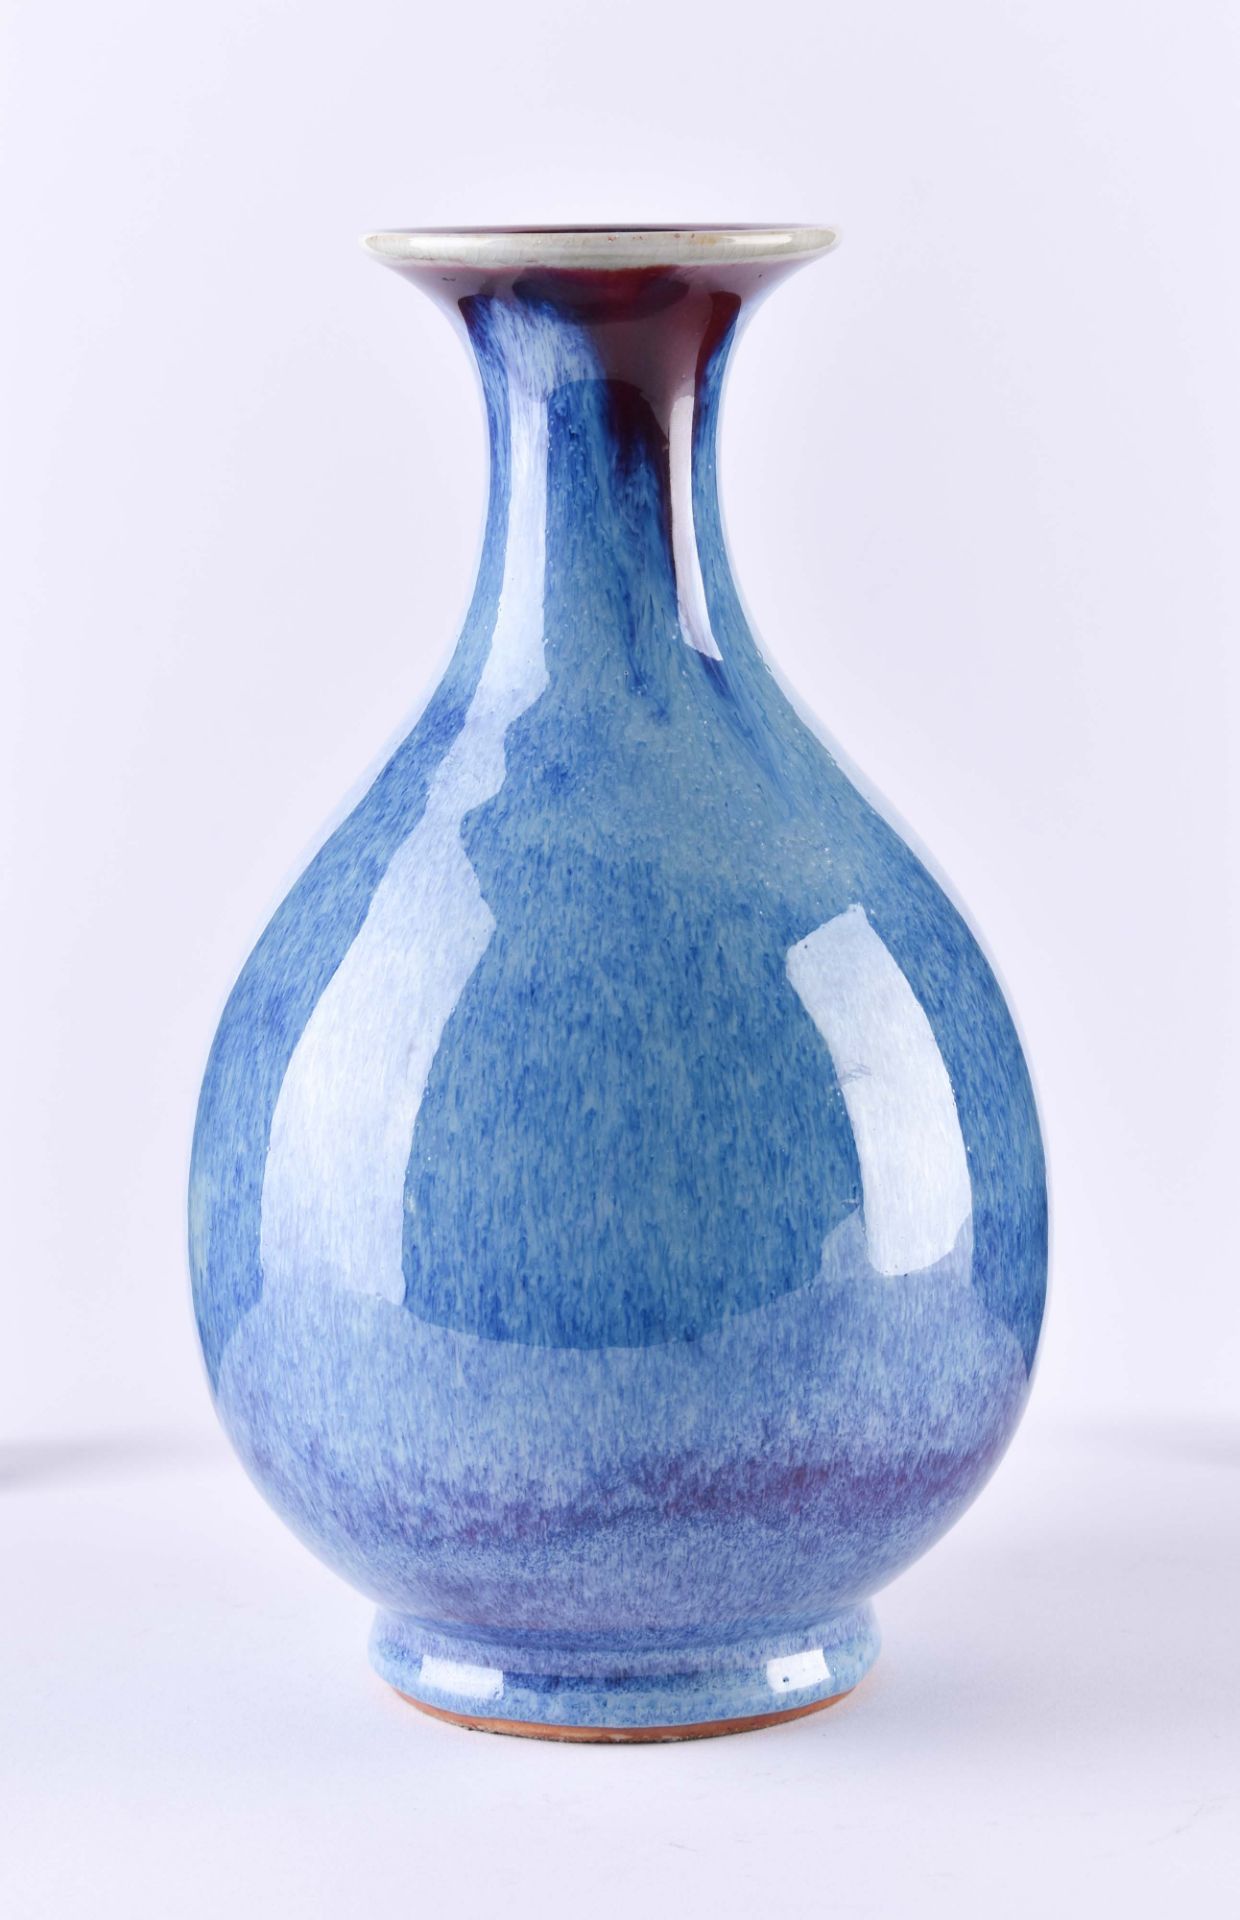 Vase China Qing dynasty